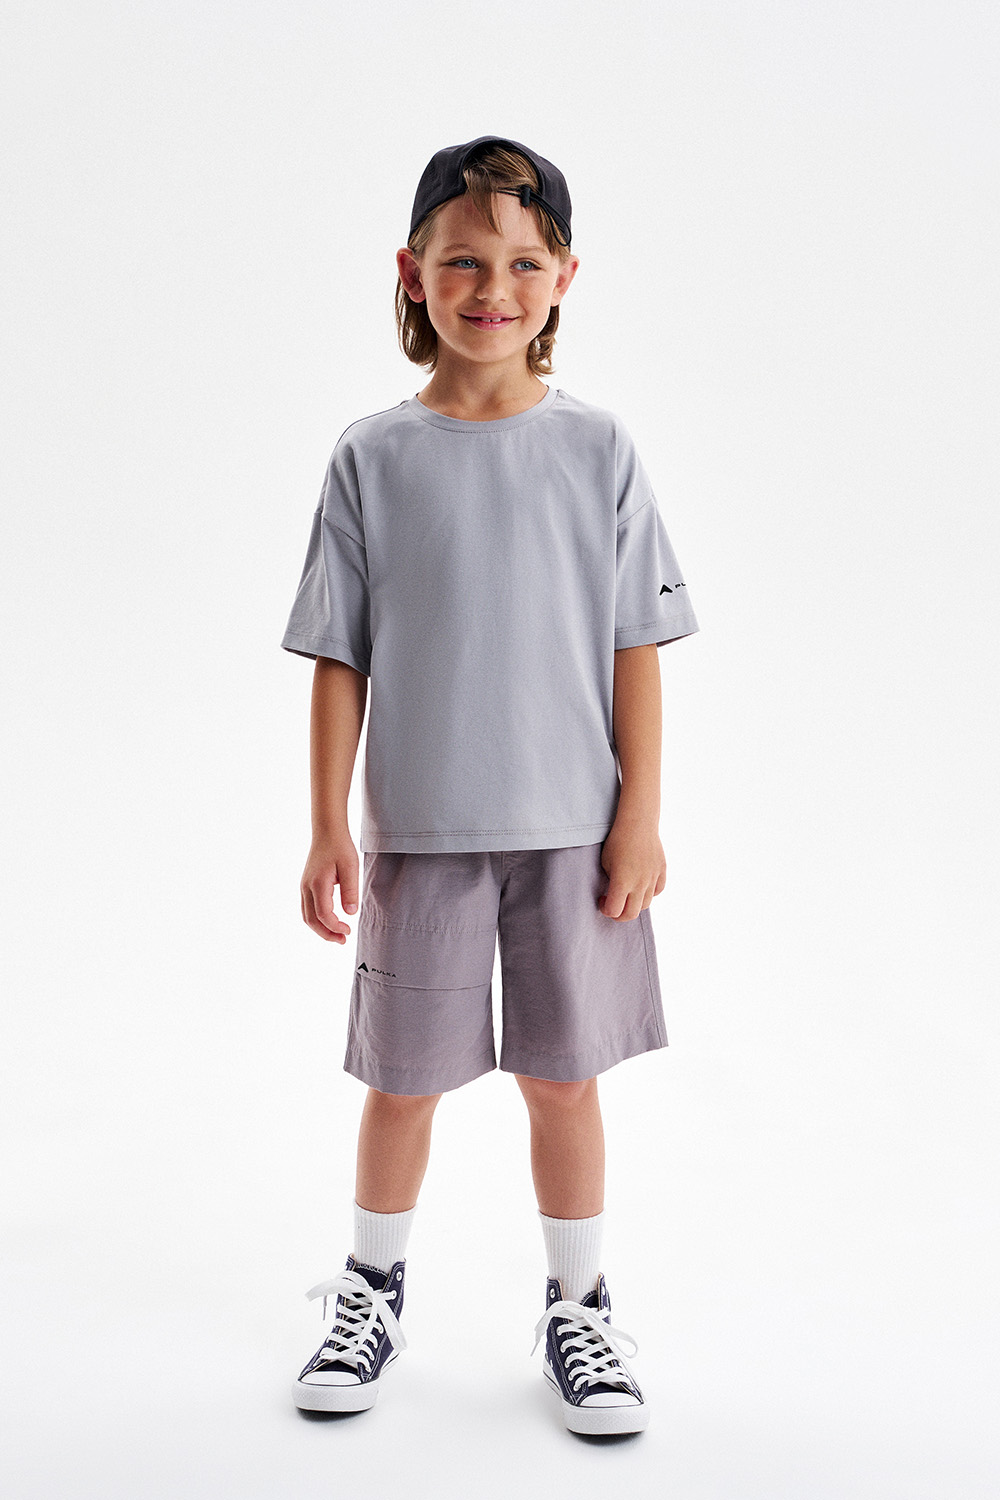 Хлопковая футболка унисекс (PUASU-438-38420-807) Silver spoon